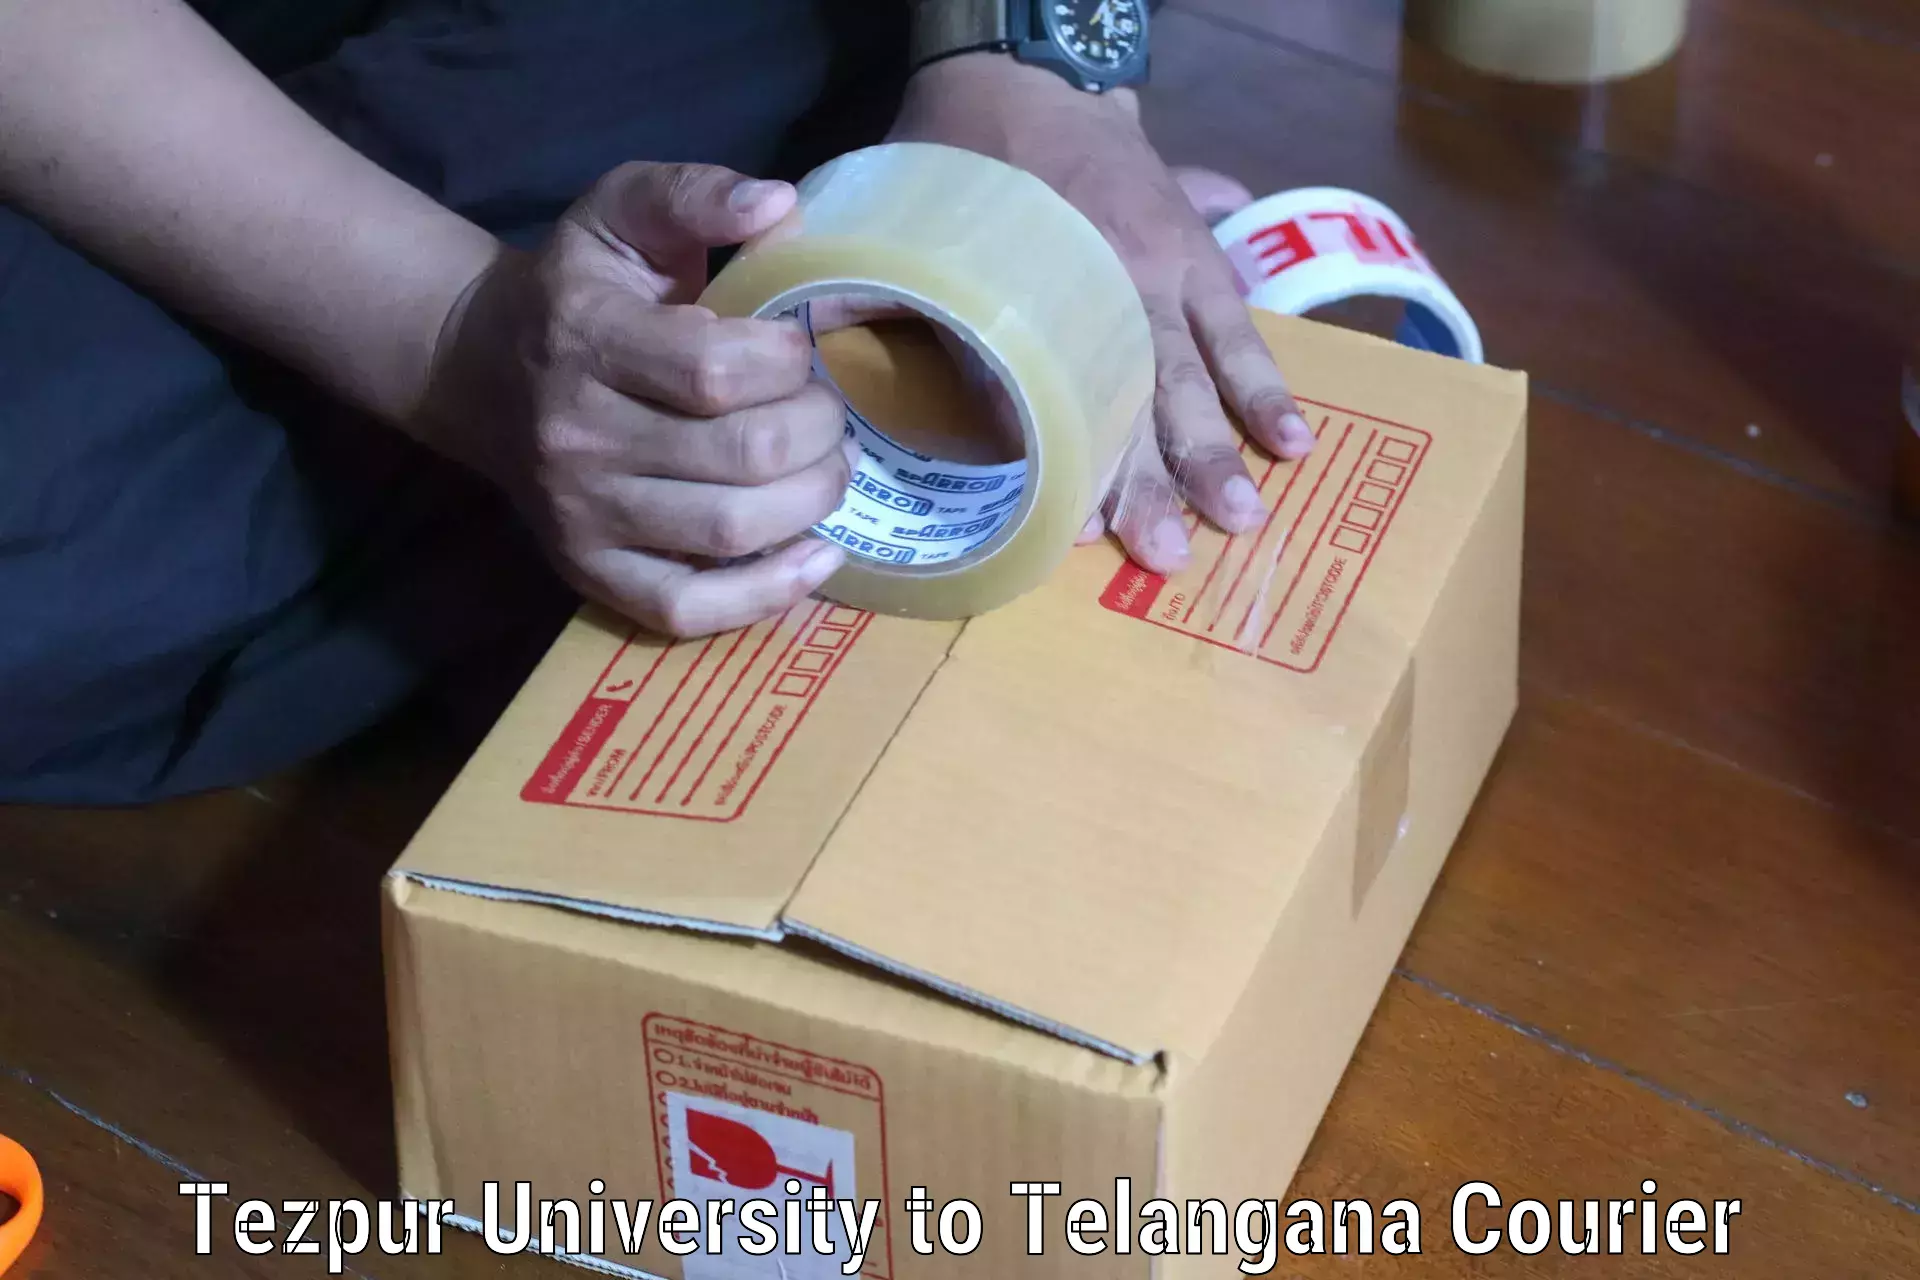 Global shipping solutions in Tezpur University to Narsampet